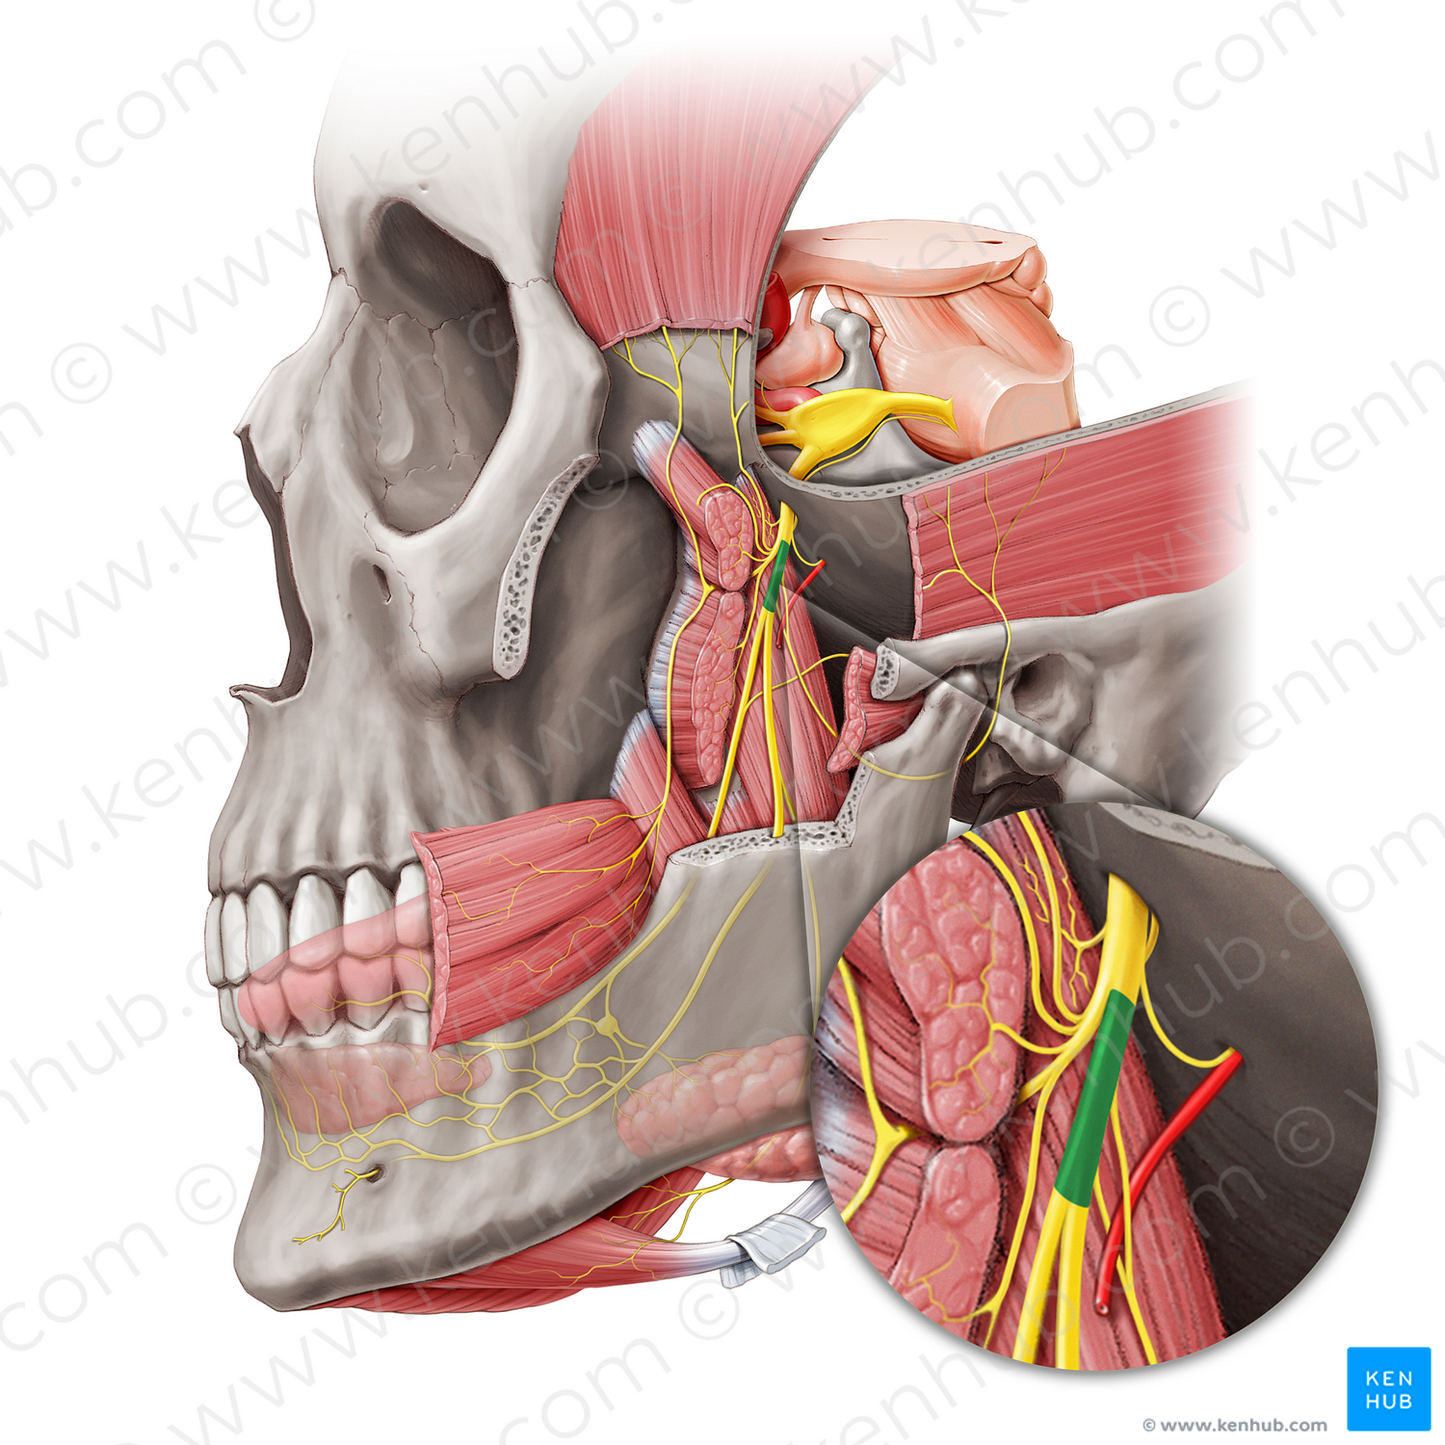 Posterior division of mandibular nerve (#20462)